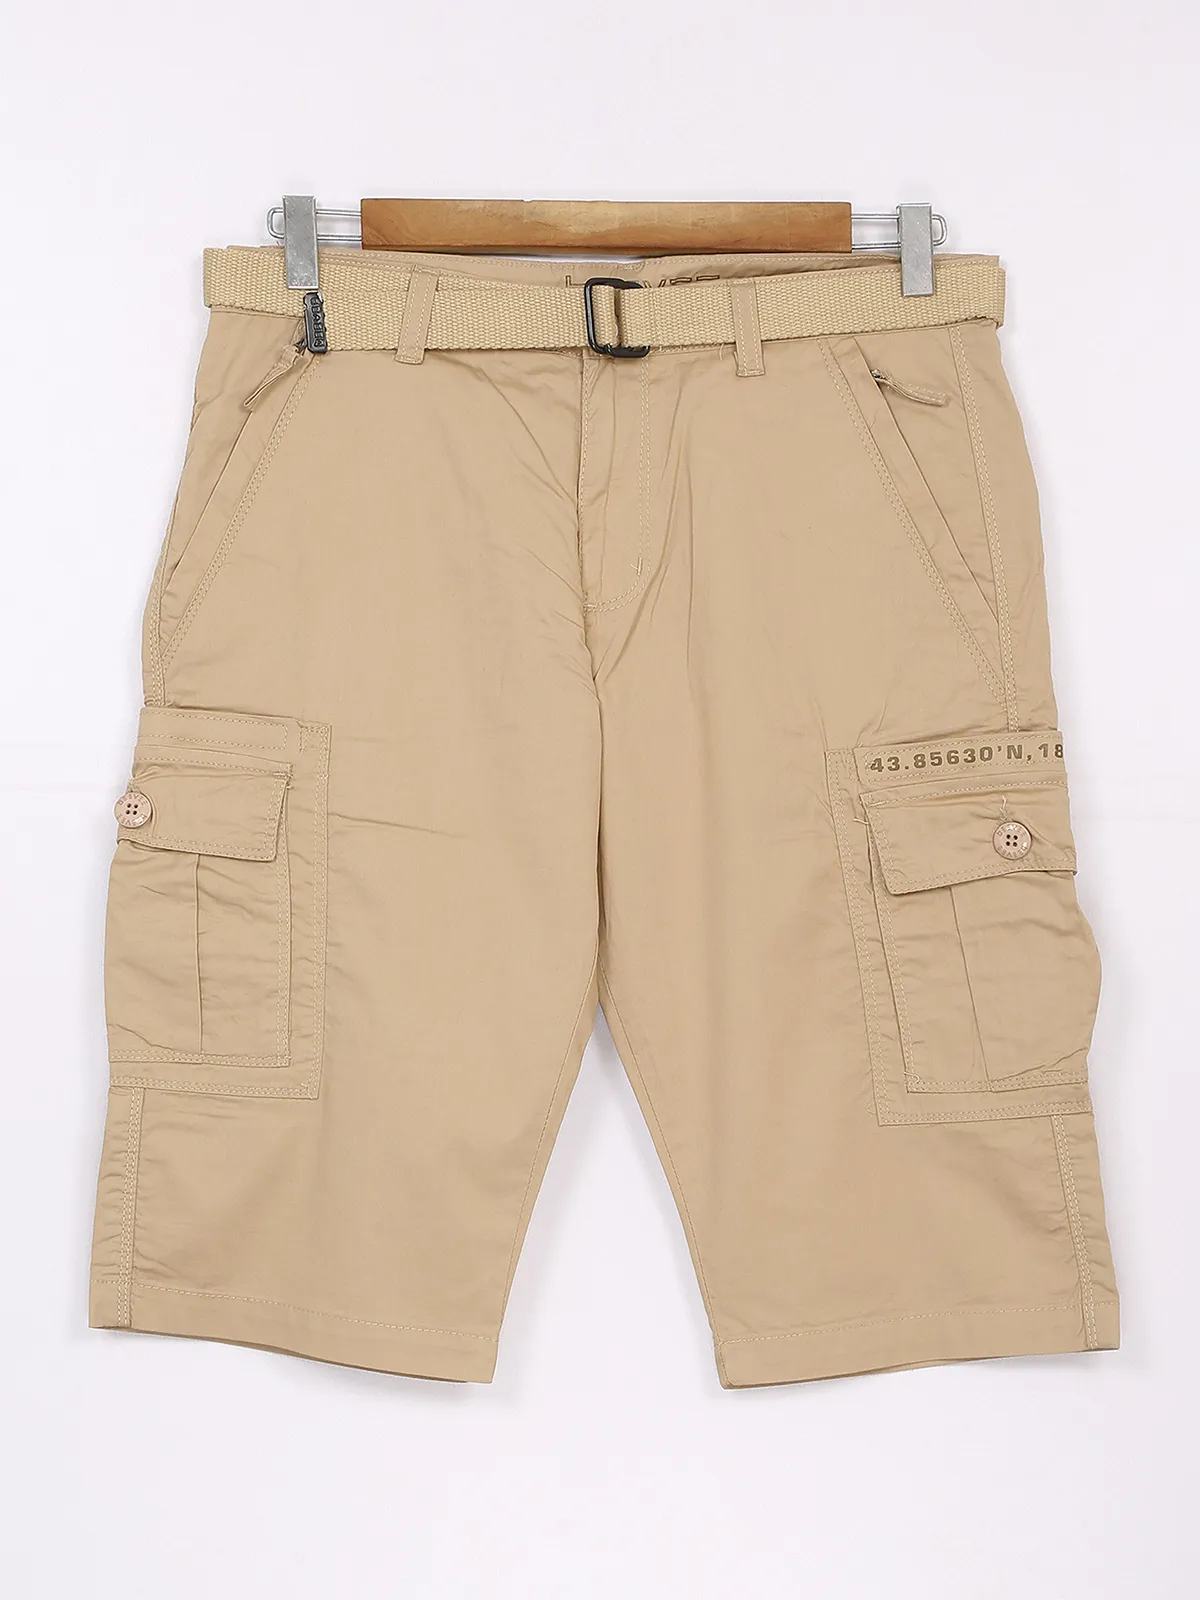 Beevee khaki cotton solid shorts